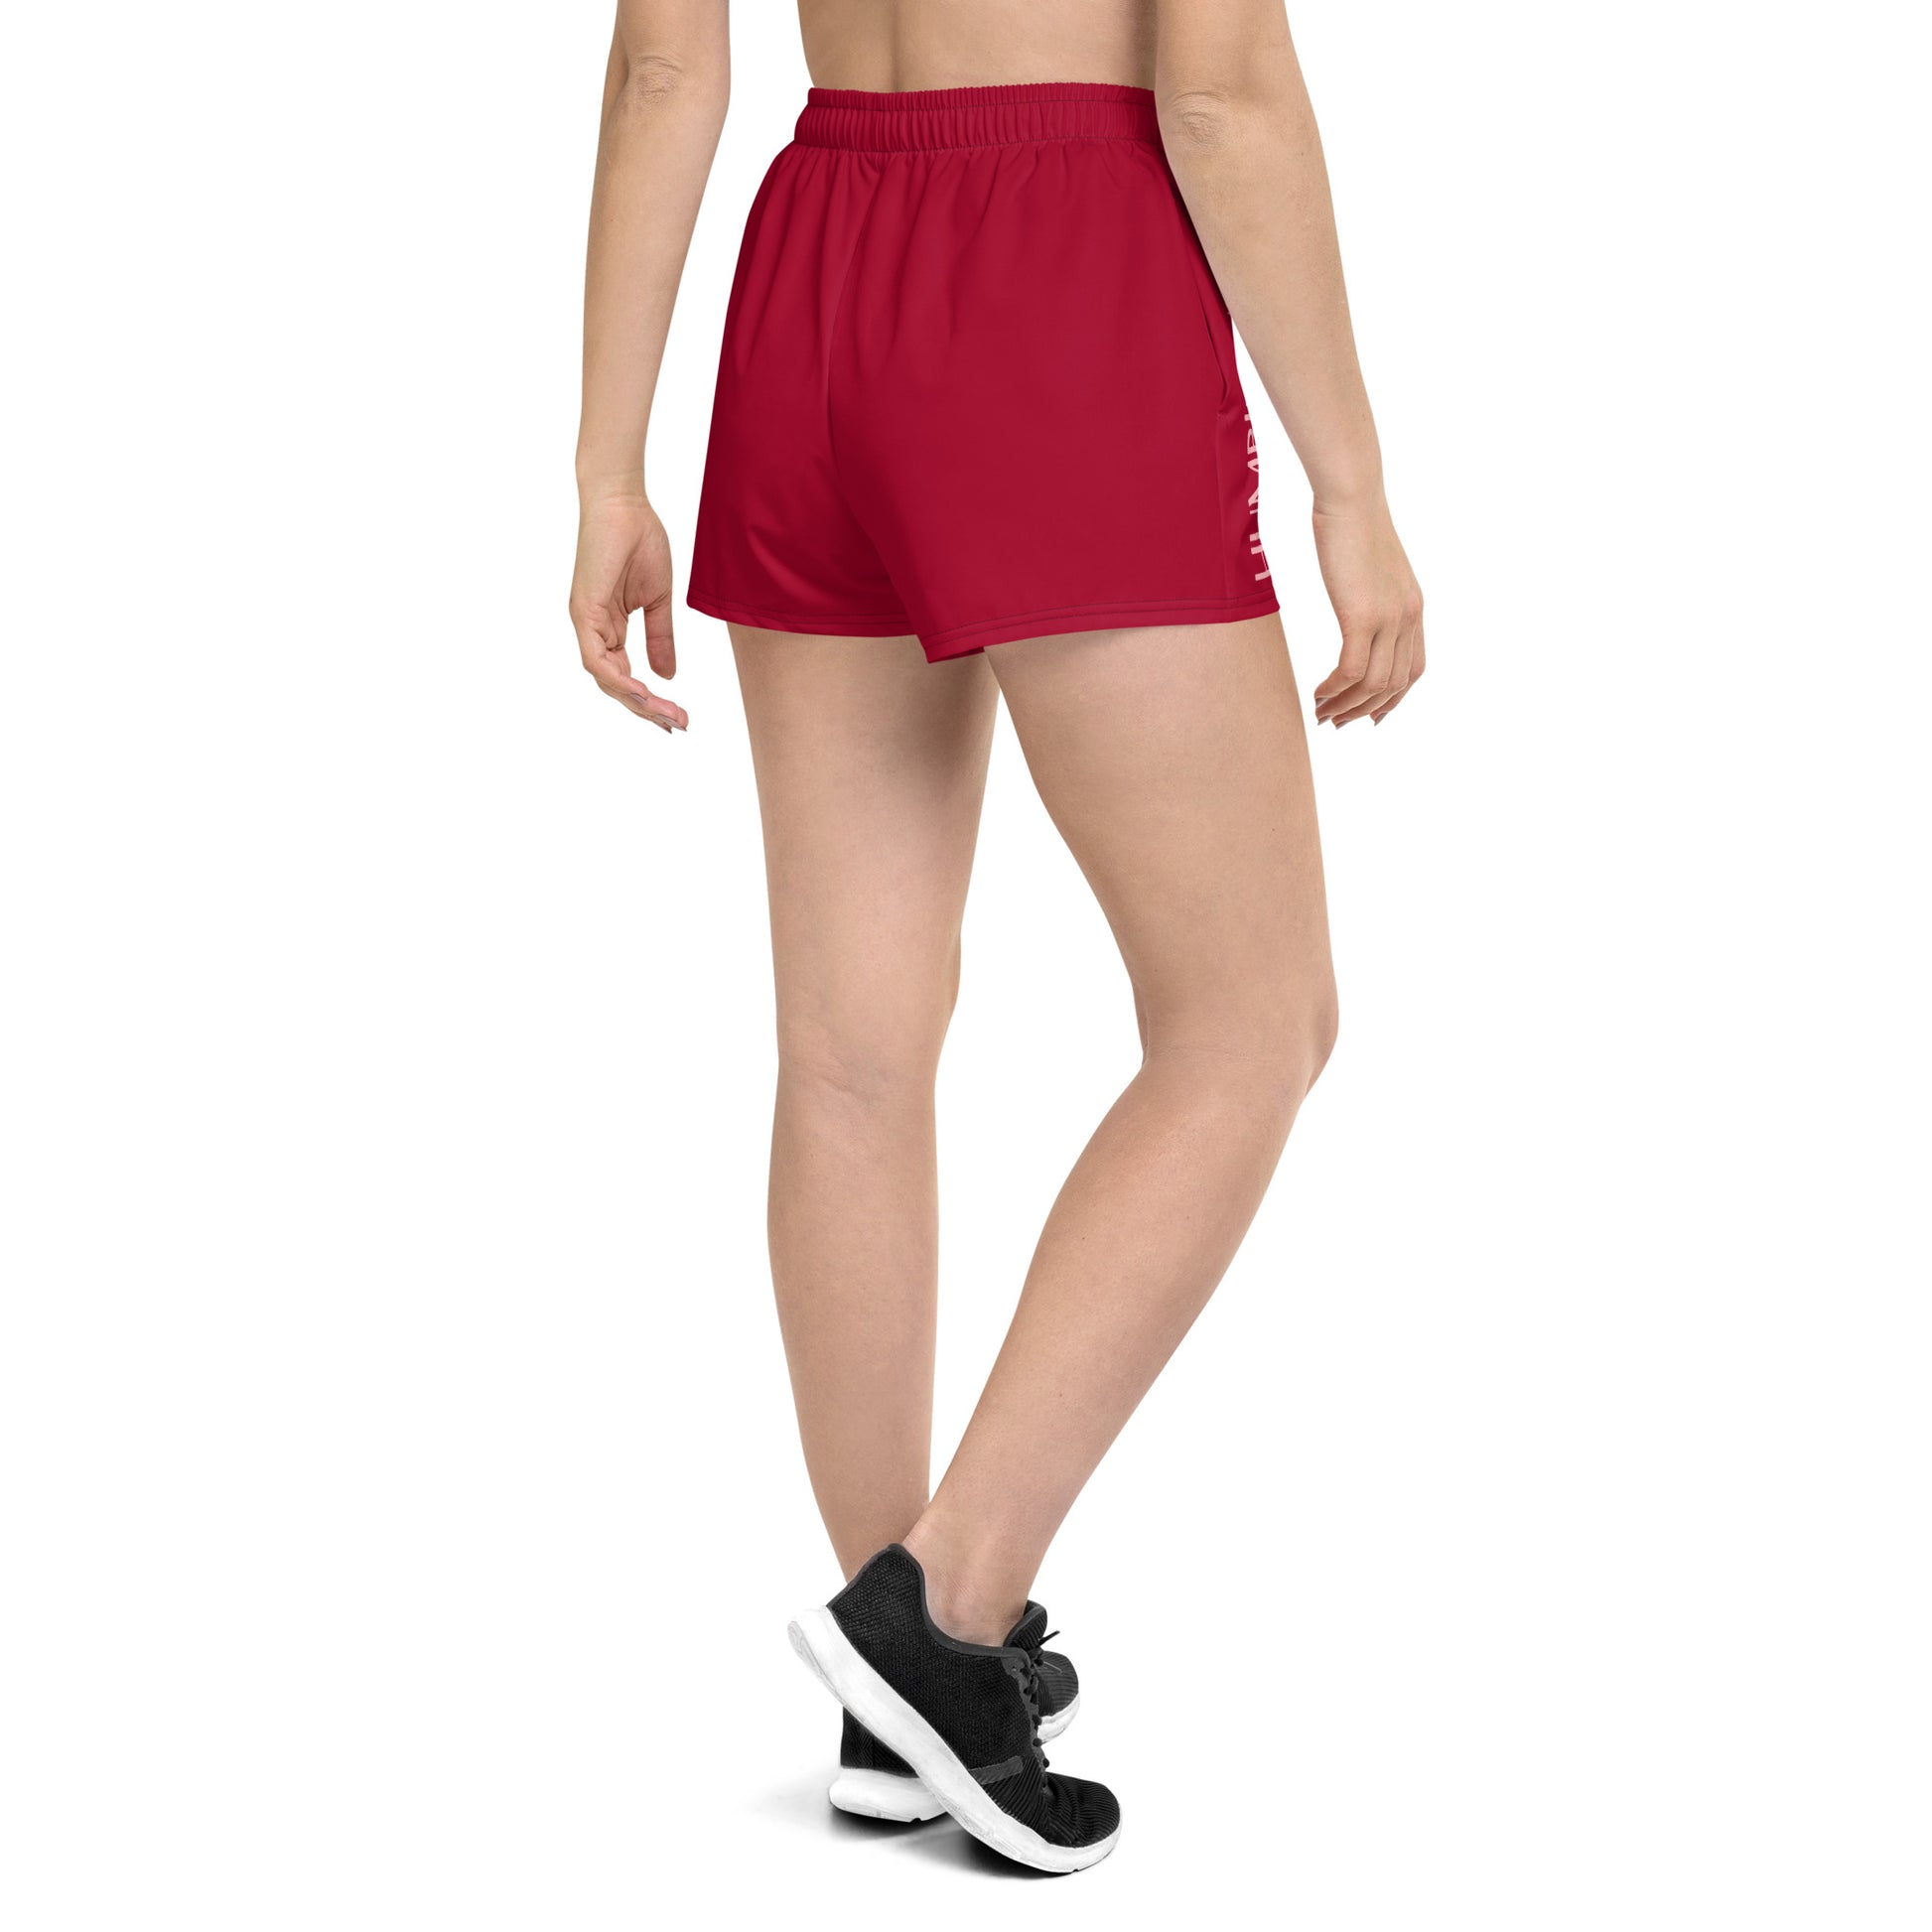 Humble Sportswear, women’s shorts, women’s running shorts, red running shorts, red gym shorts